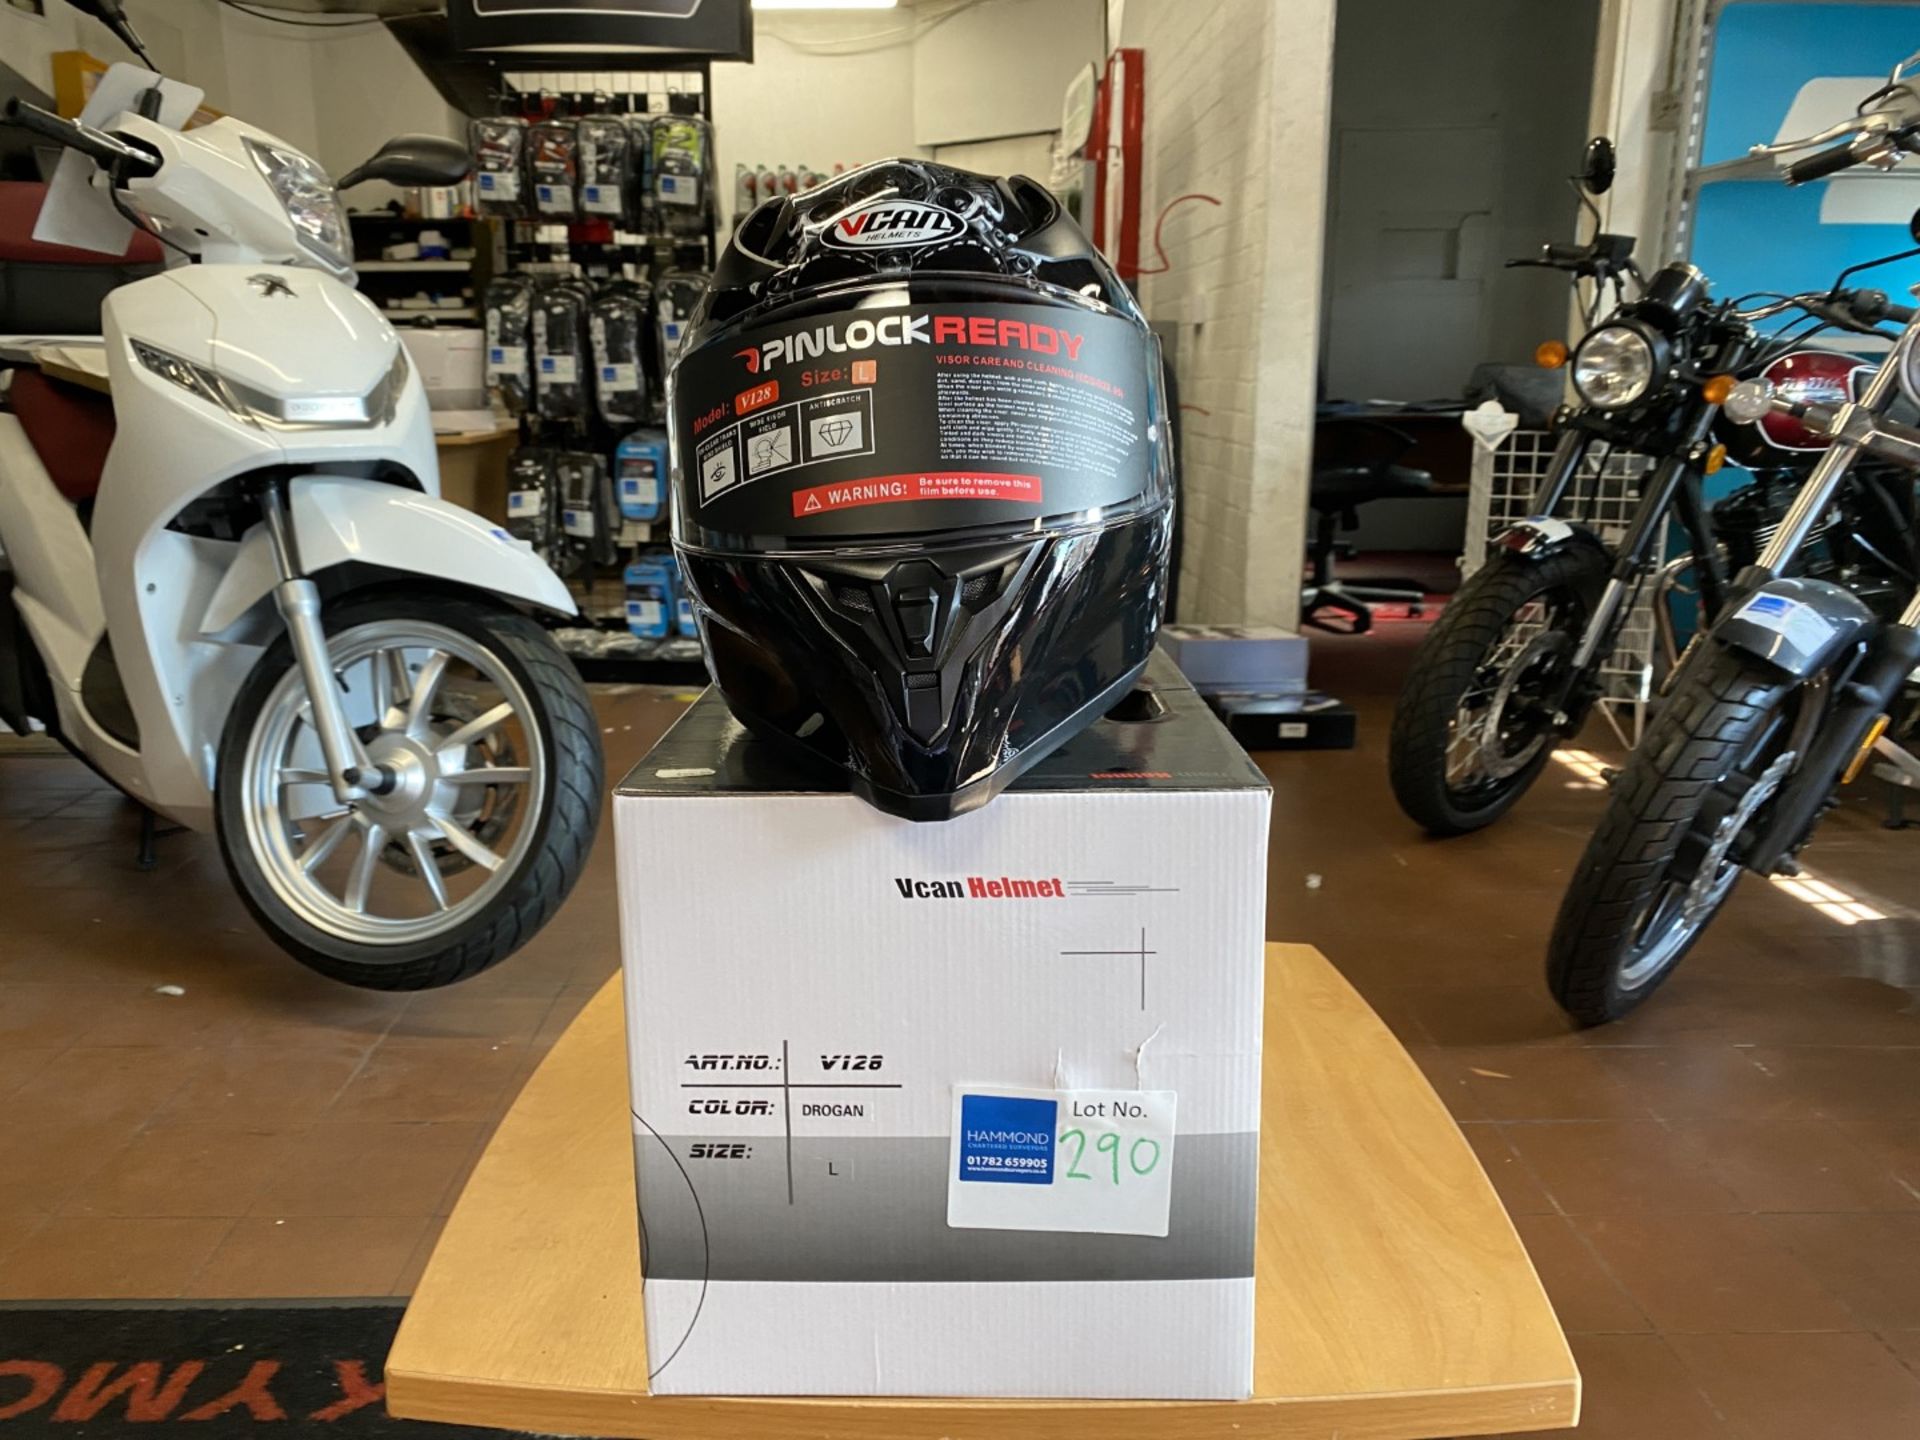 Vcan Helmet V128 Drogan Large - Vcan Helmets - British Motorcycle / Motorbike Sport Approved Helmet